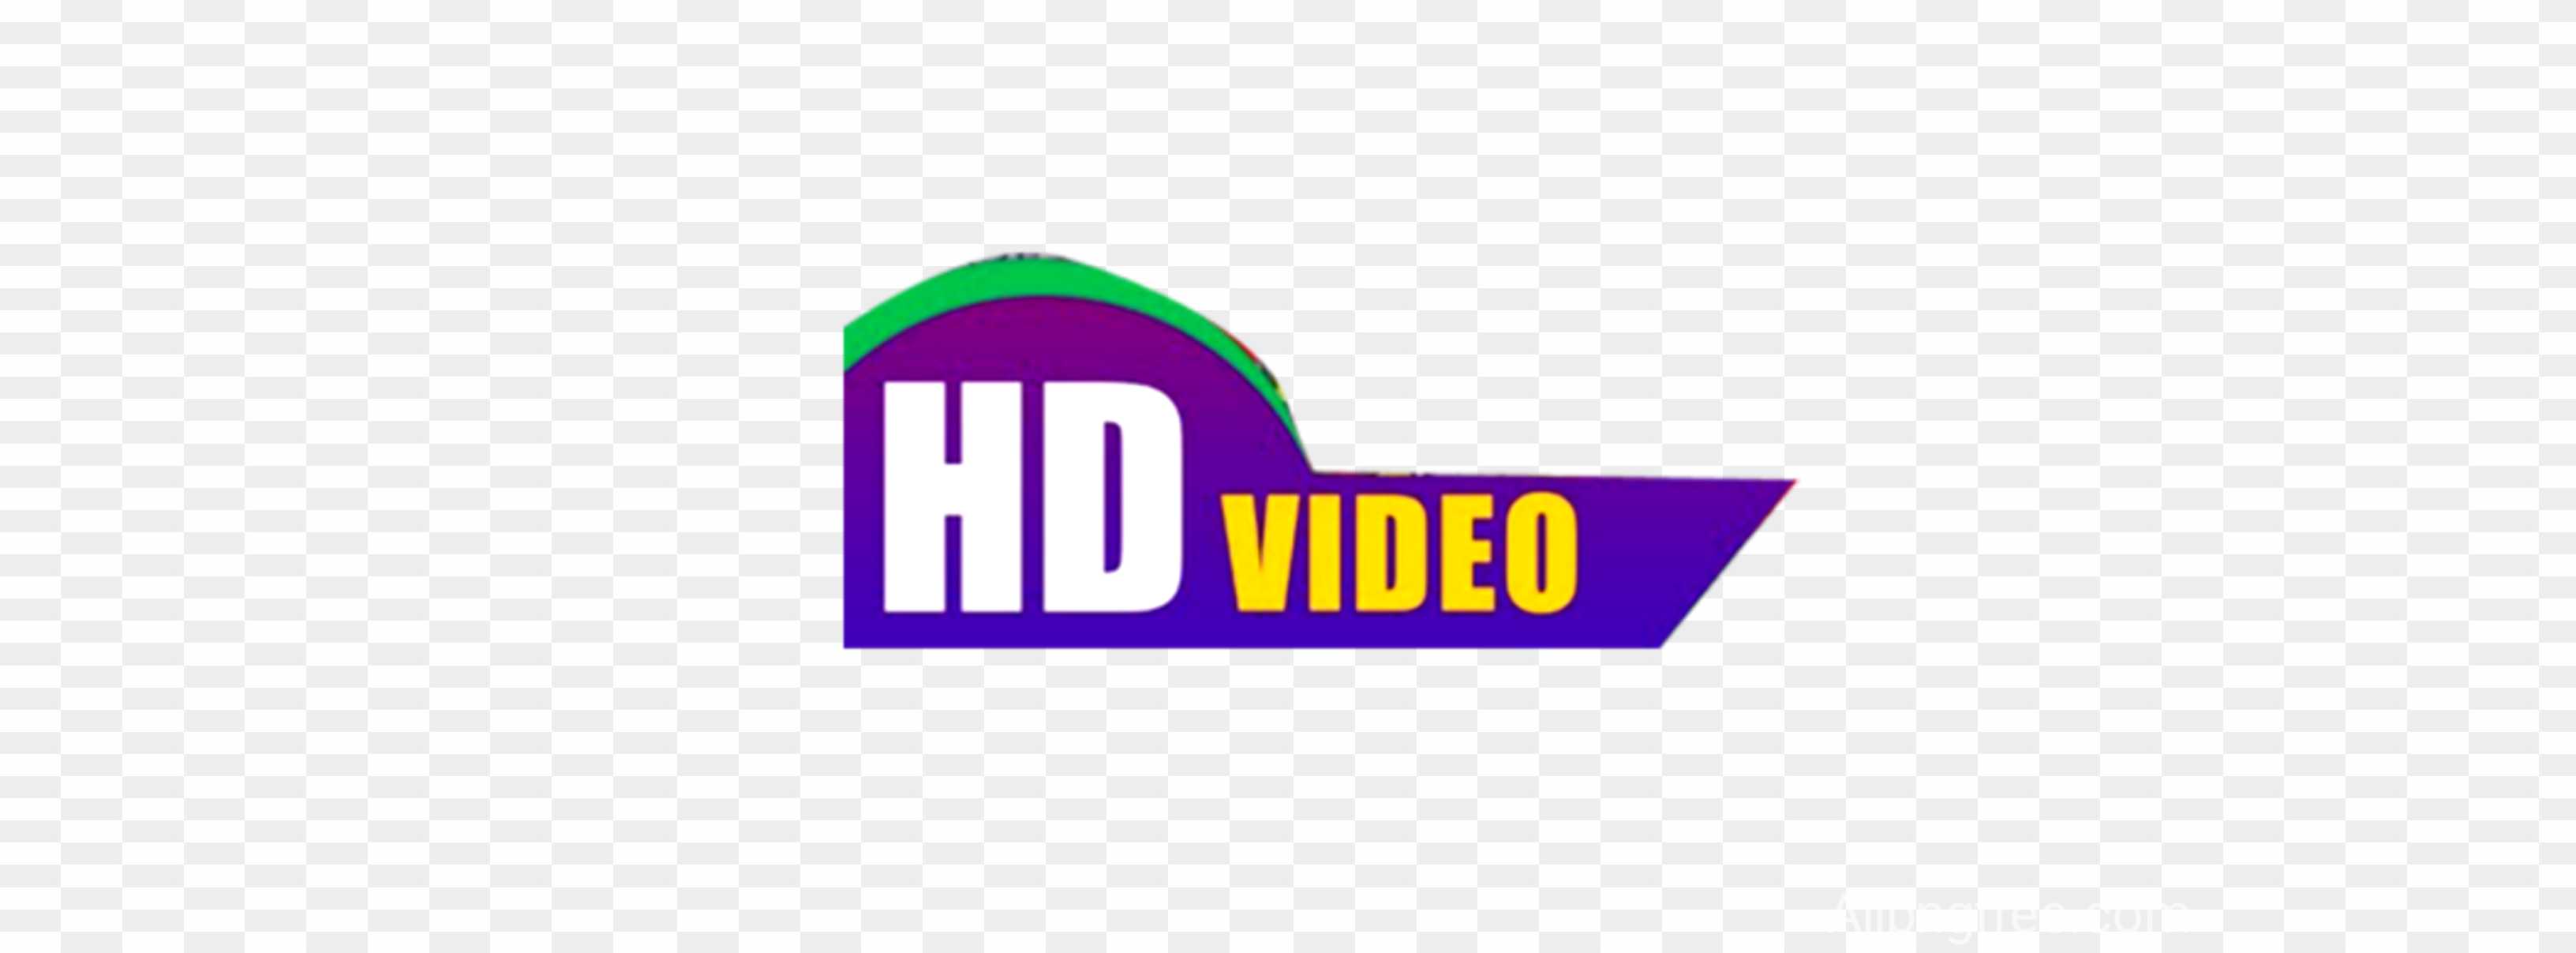 Videography Logo PNG Transparent & SVG Vector - Freebie Supply